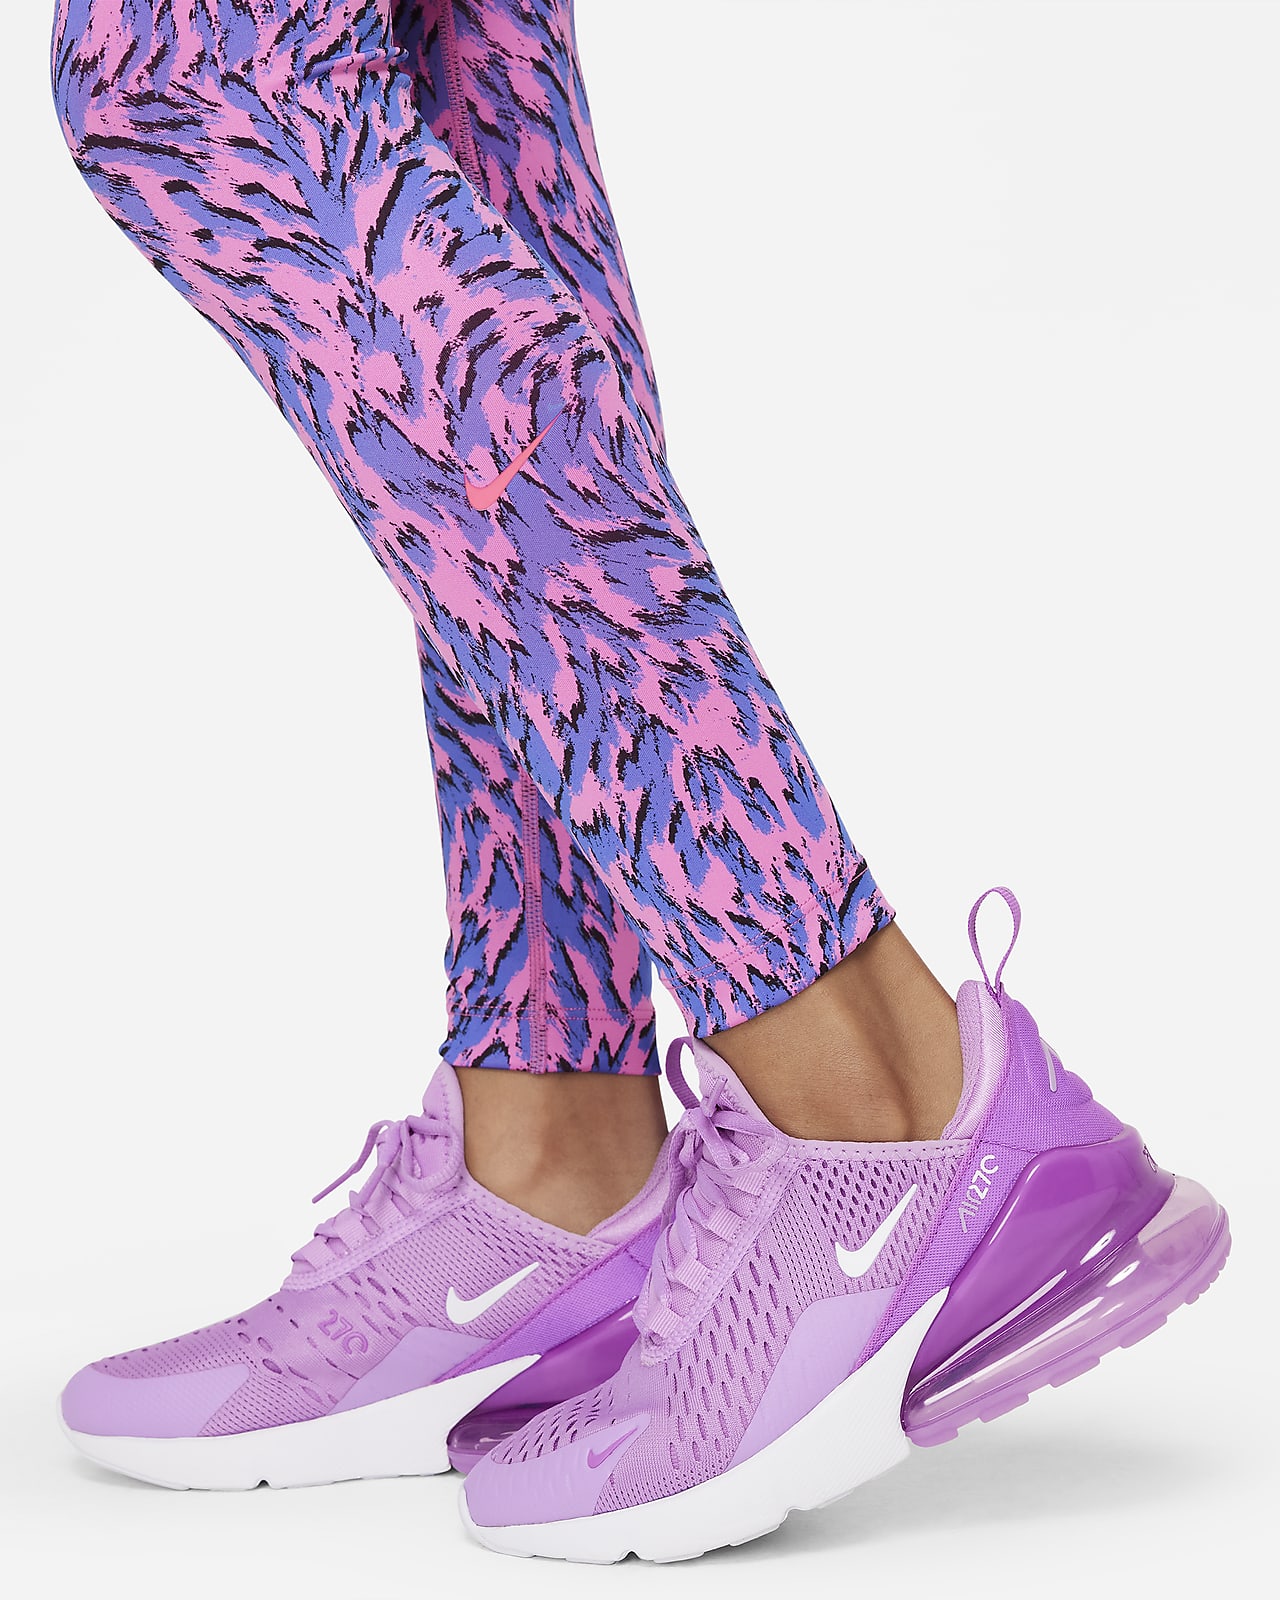 Nike Pro Dri-FIT Older Kids Girls Leggings (DQ9119) black/white ab 23,01 €